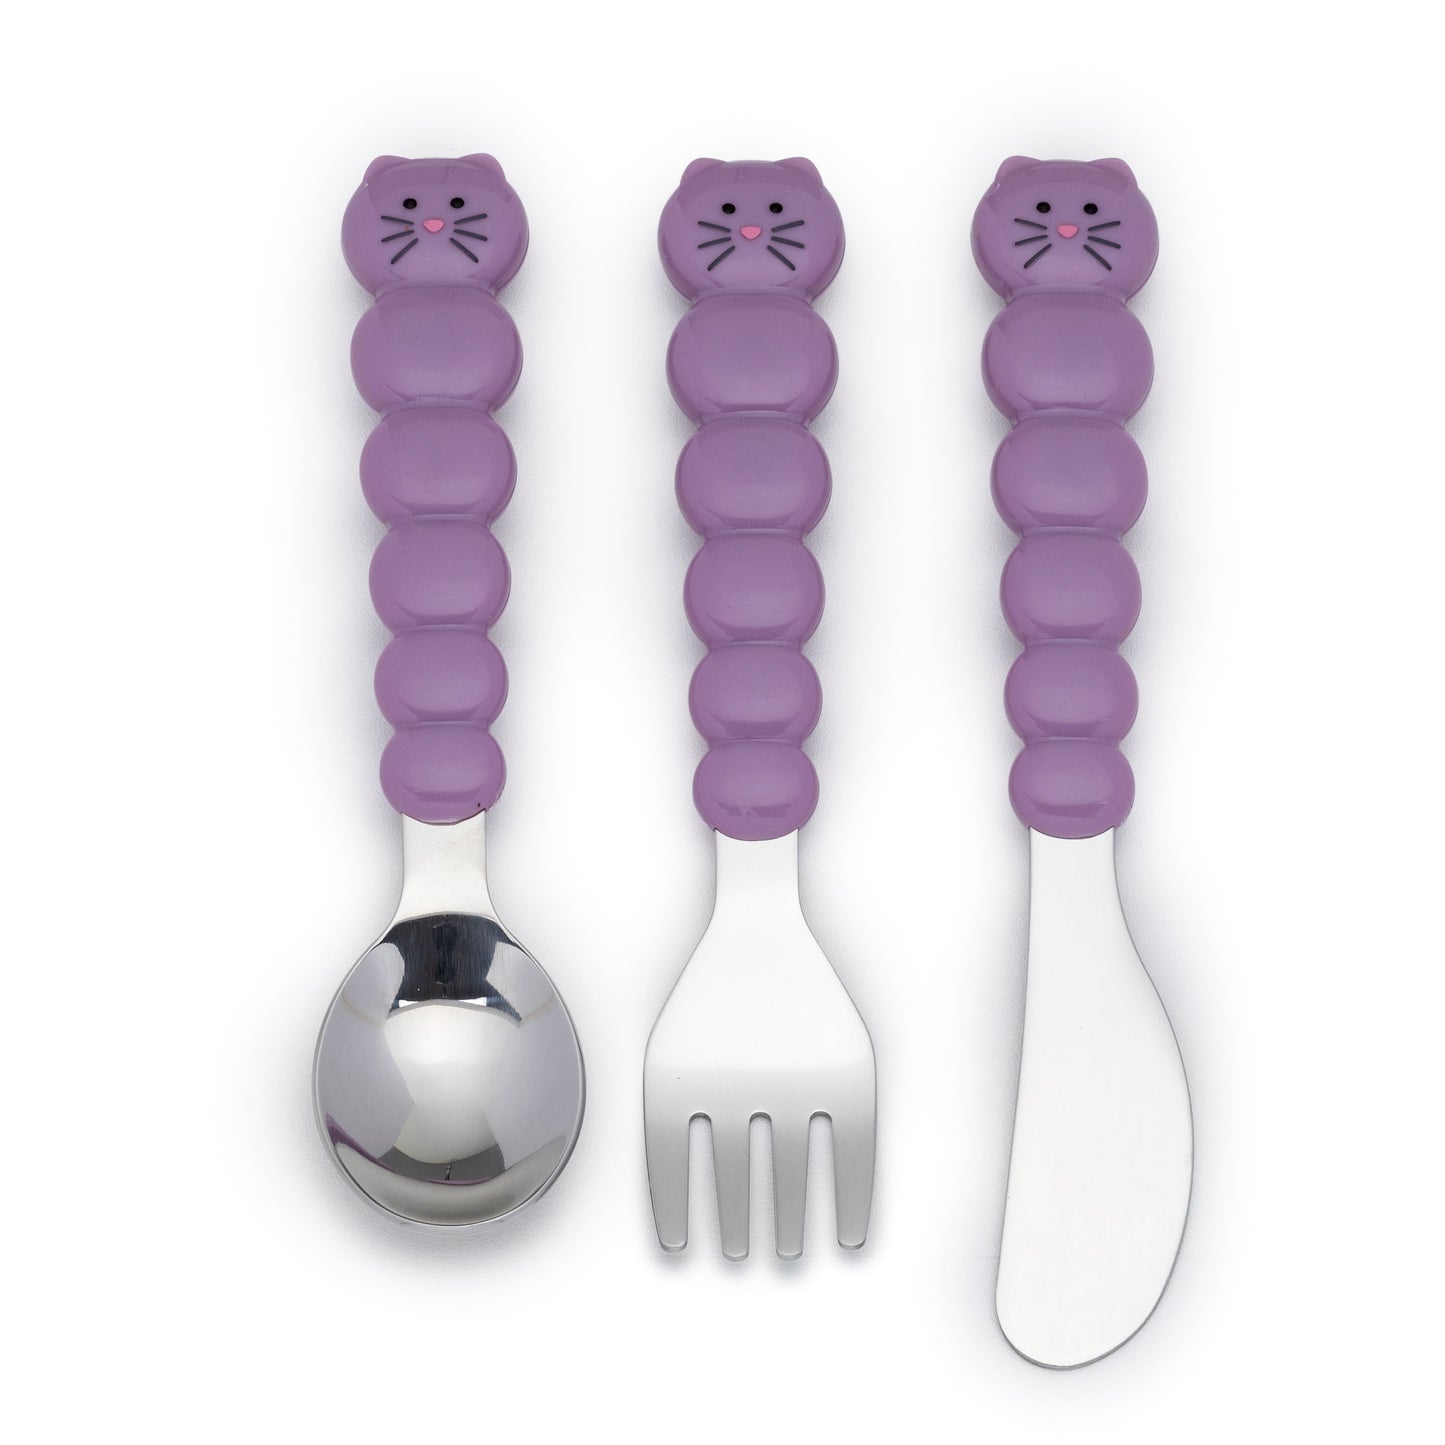 melii Colorful Animal Spoon & Fork Sets for Kids - Encourages Independent Feeding and Fine Motor Skills - BPA-Free, Dishwasher Safe - Purple Cat & Grey Bulldog (6 Pcs)